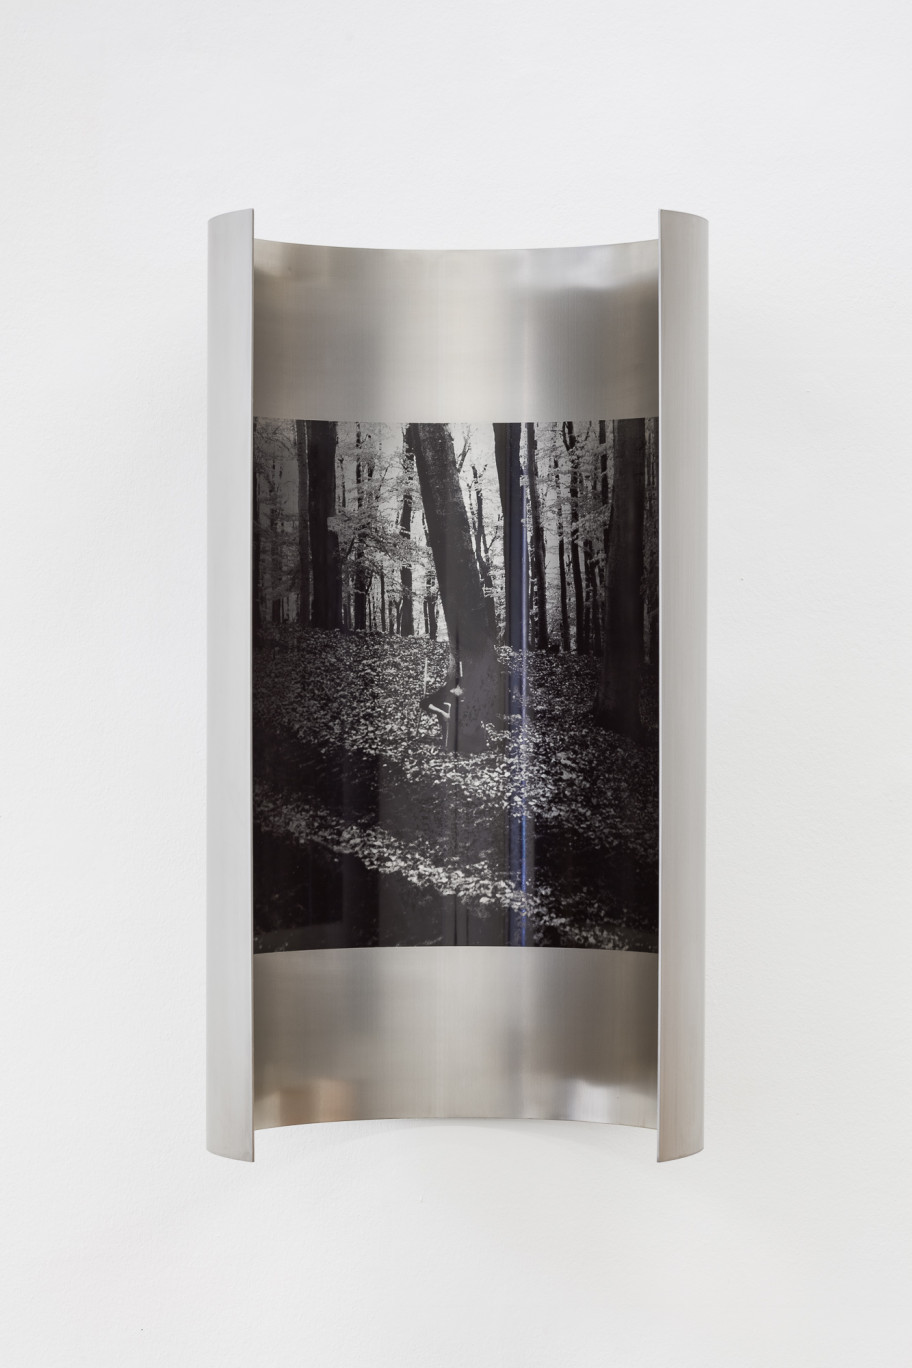  Yu  Ji Refined Still Life No. 9, 2021Edition of 4 stainless steel, silkscreen print 100 x 55 x 43 cm 